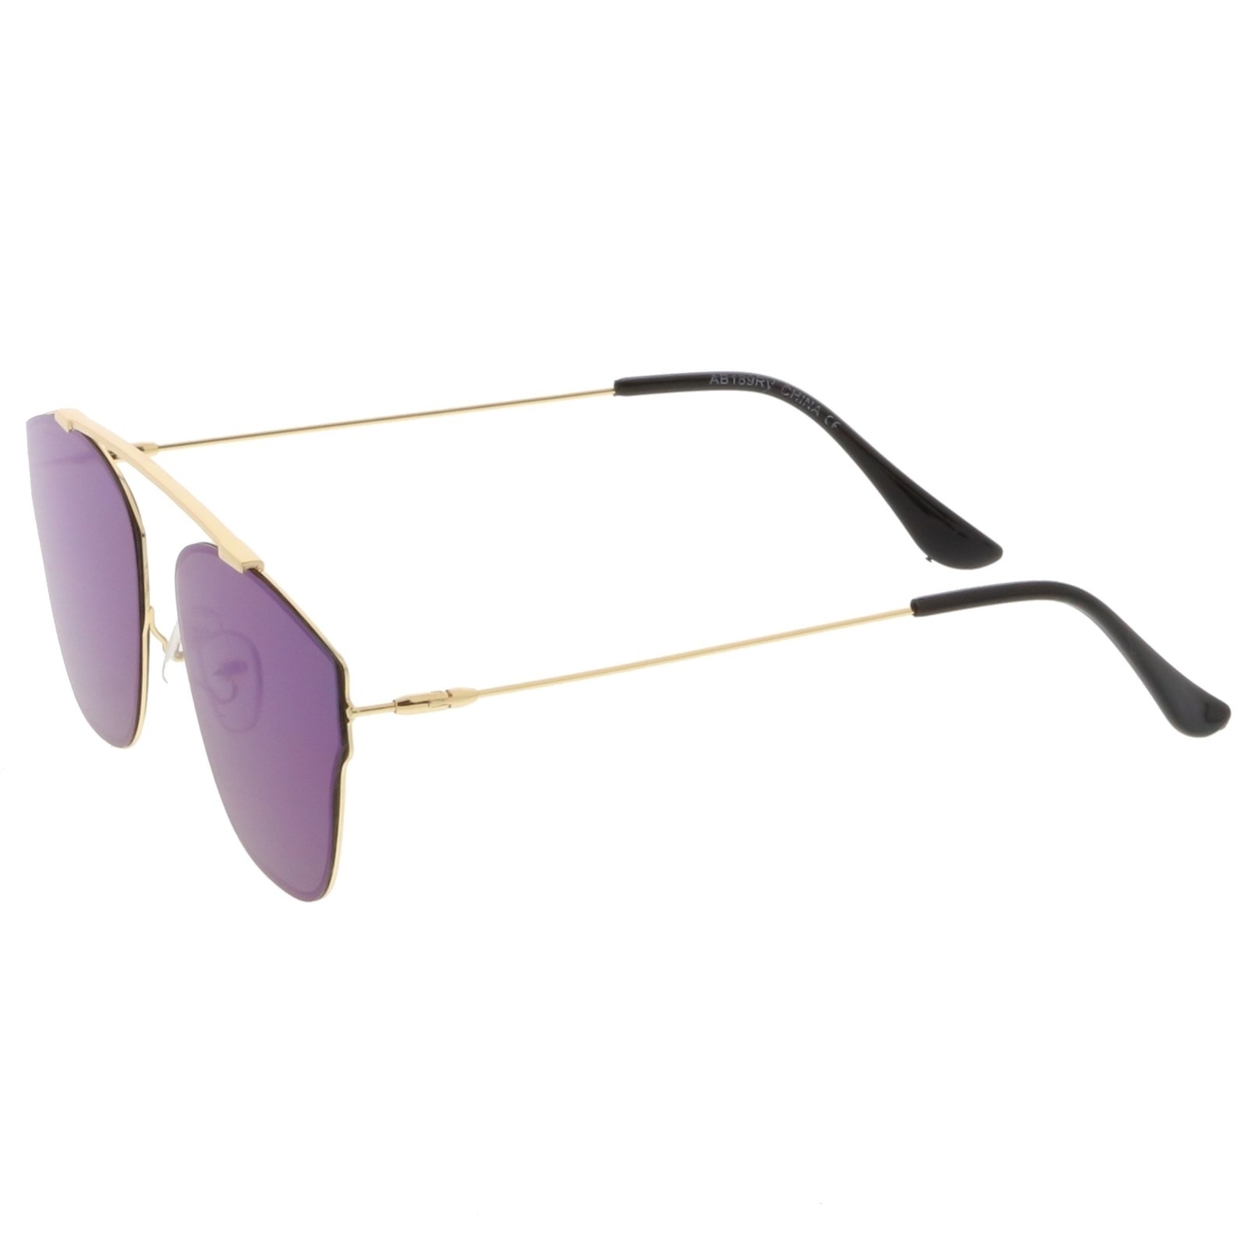 Modern Ultra Slim Metal Curved Crossbar Colored Mirror Flat Lens Pantos Sunglasses 57mm - Black / Green Mirror